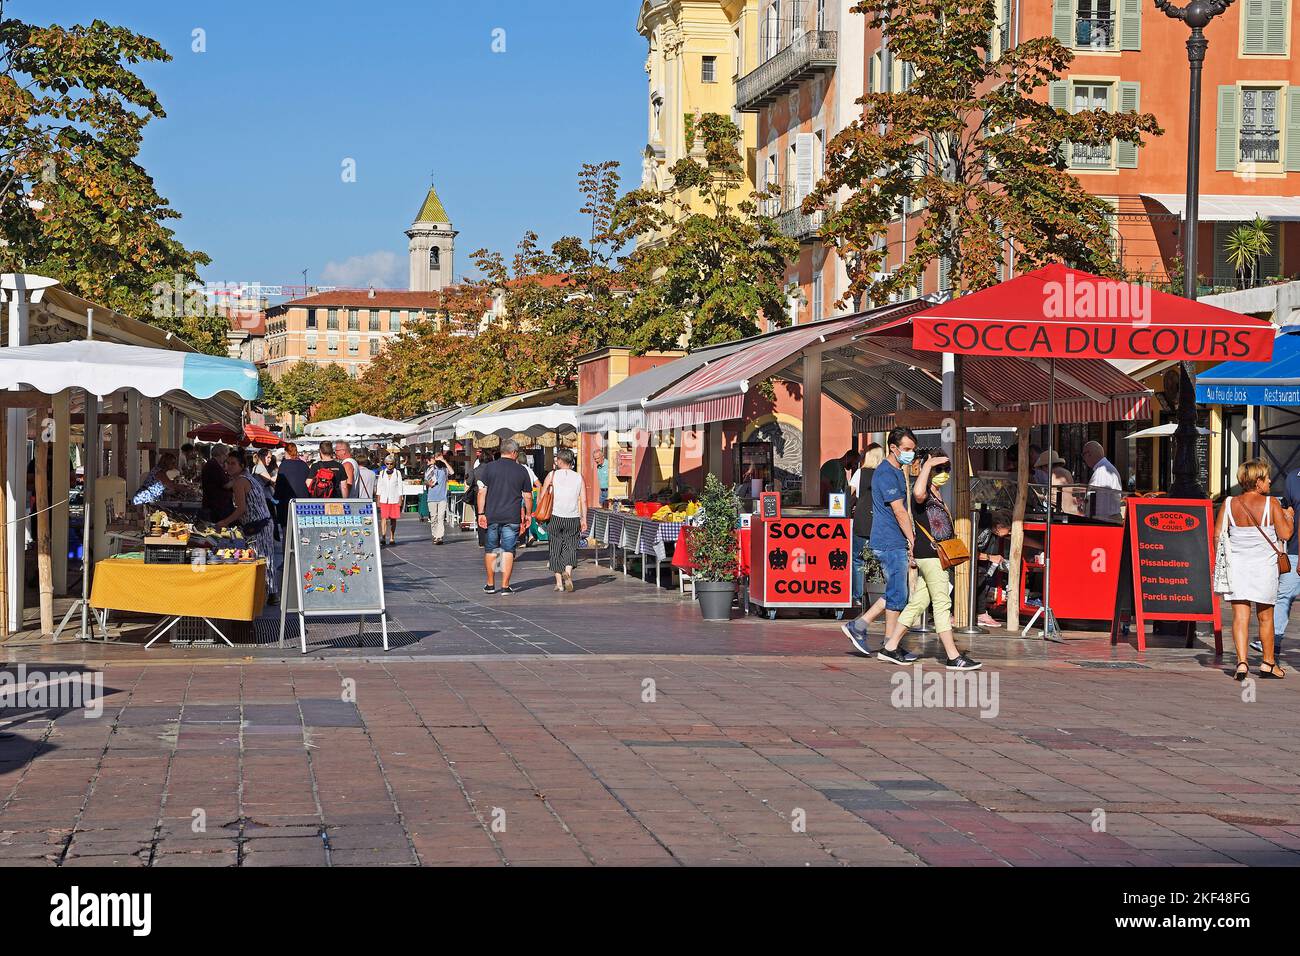 Markt auf dem Cours Saleya, Innenstadt, Nizza, Département Alpes-Maritimes, Regione Provence-Alpes-Côte d’Azur, Frankreich Foto Stock